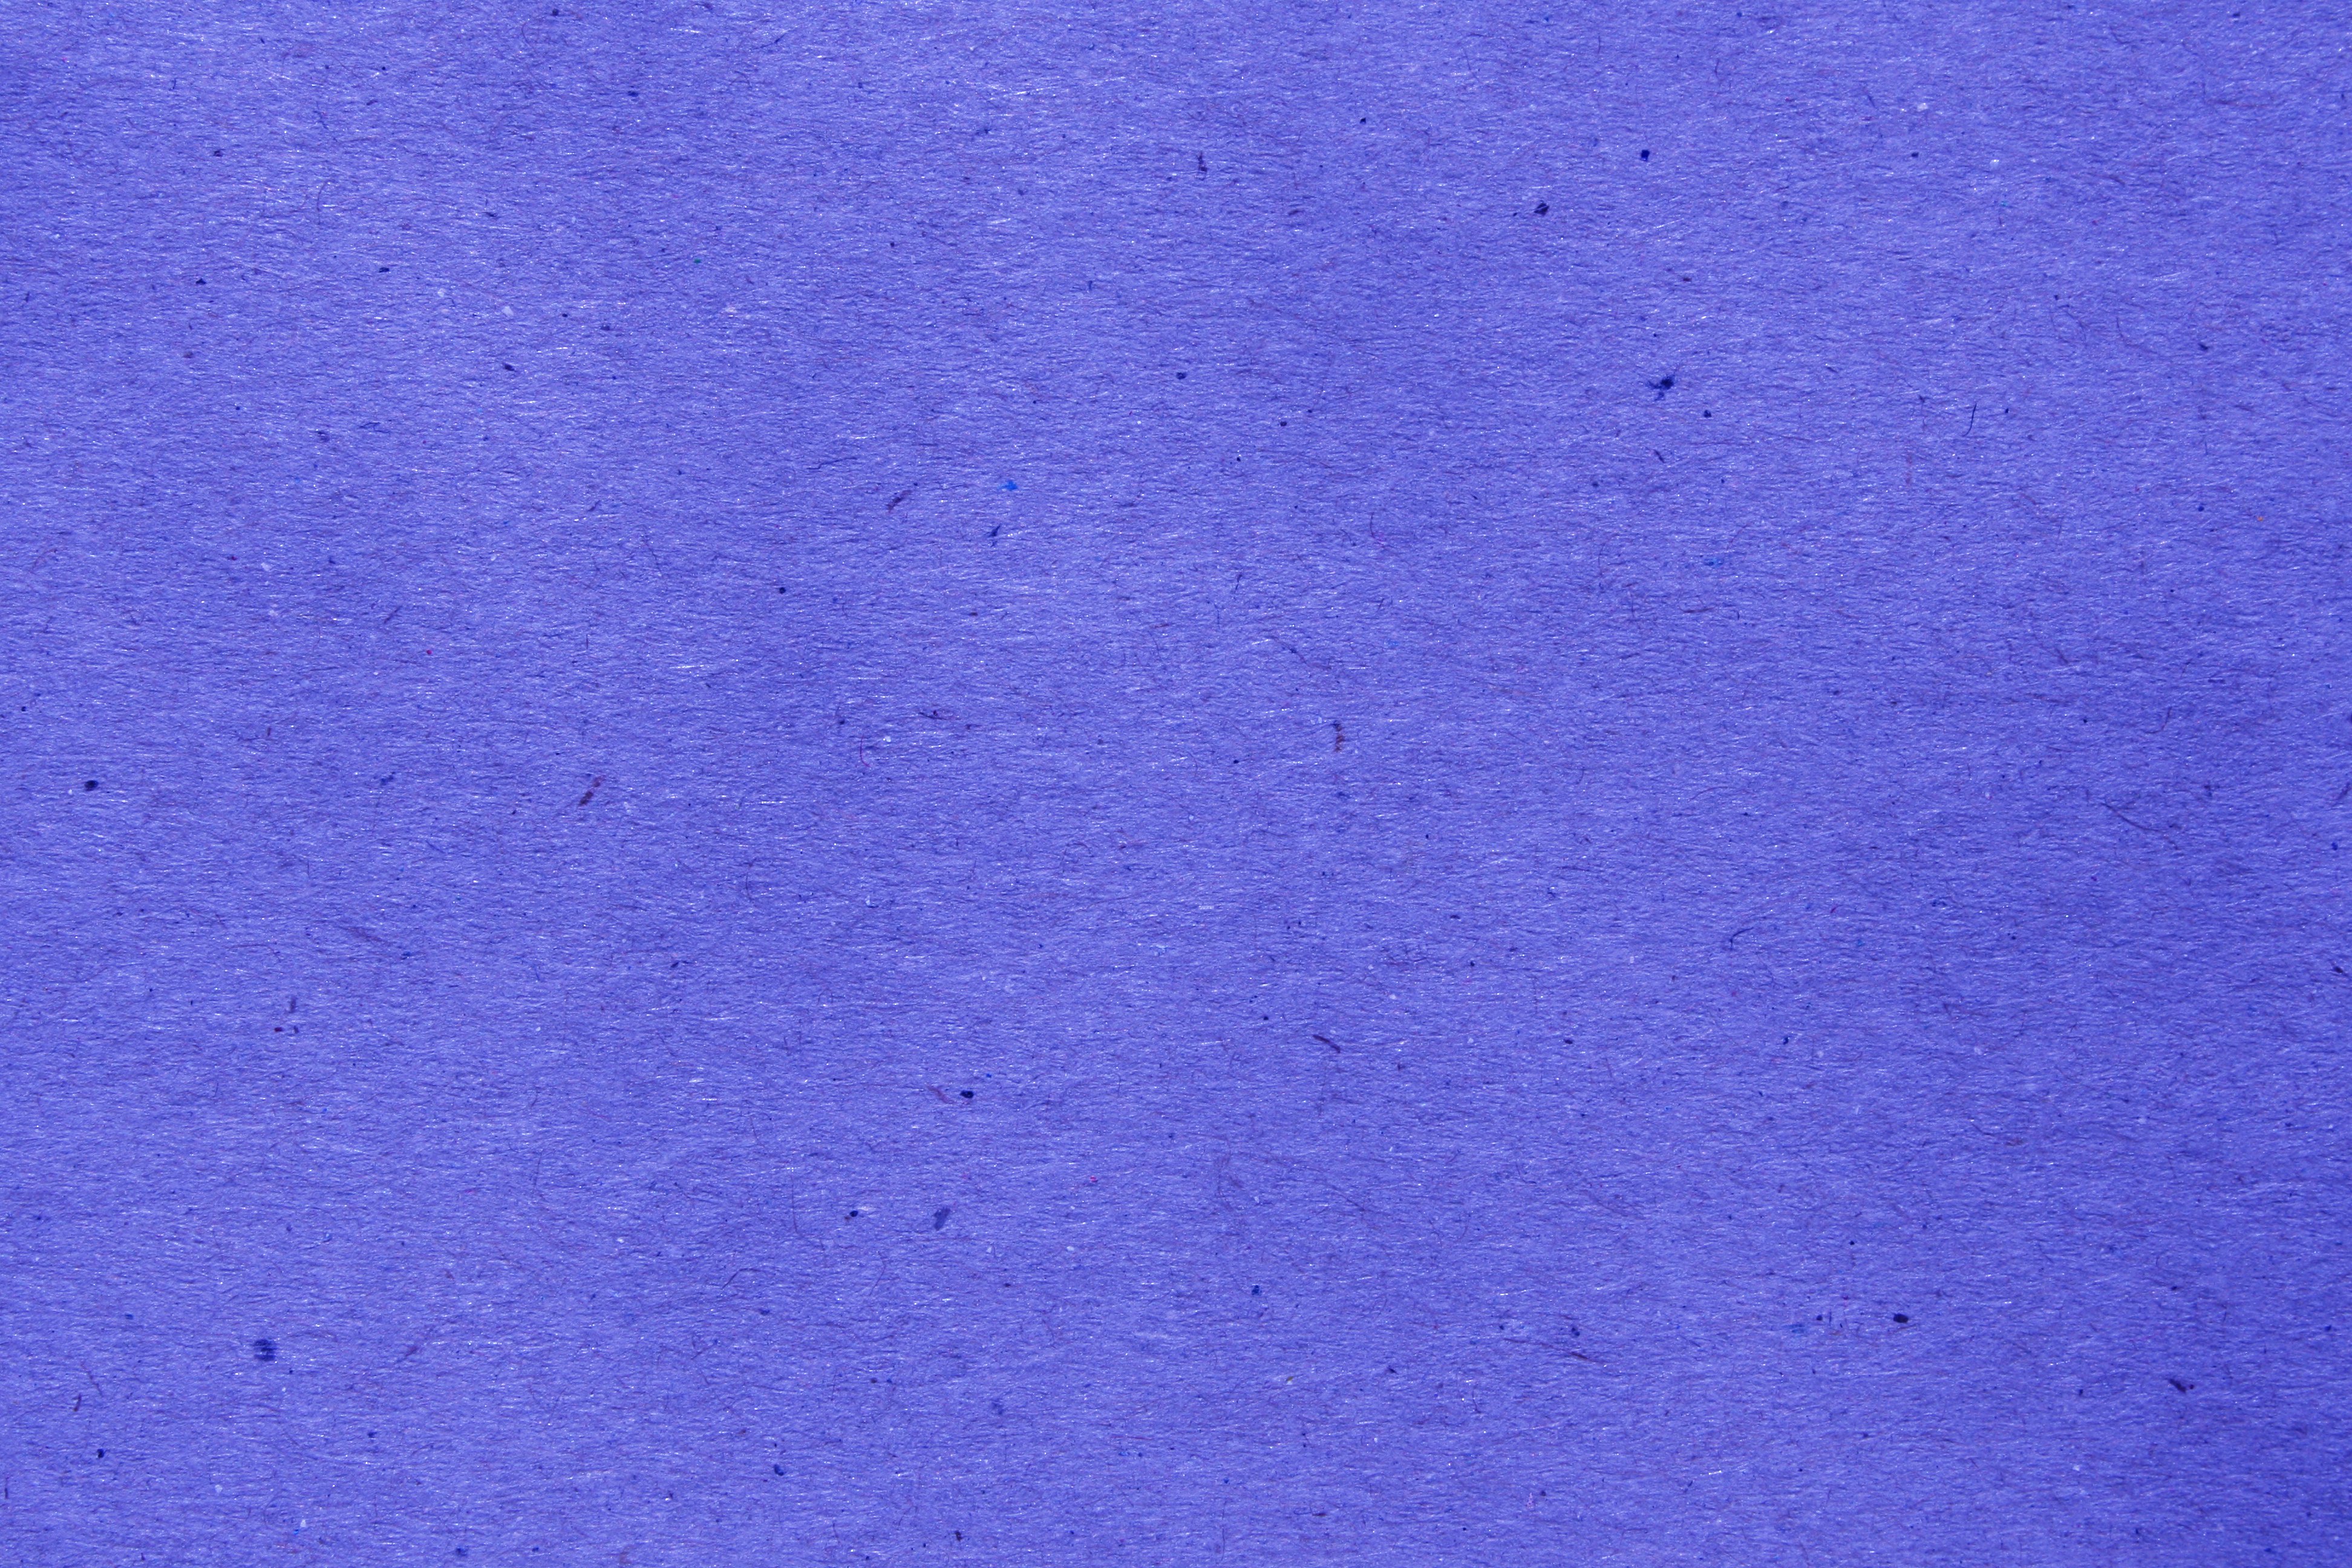 Indigo Blue Paper Texture With Flecks High Resolution Photo